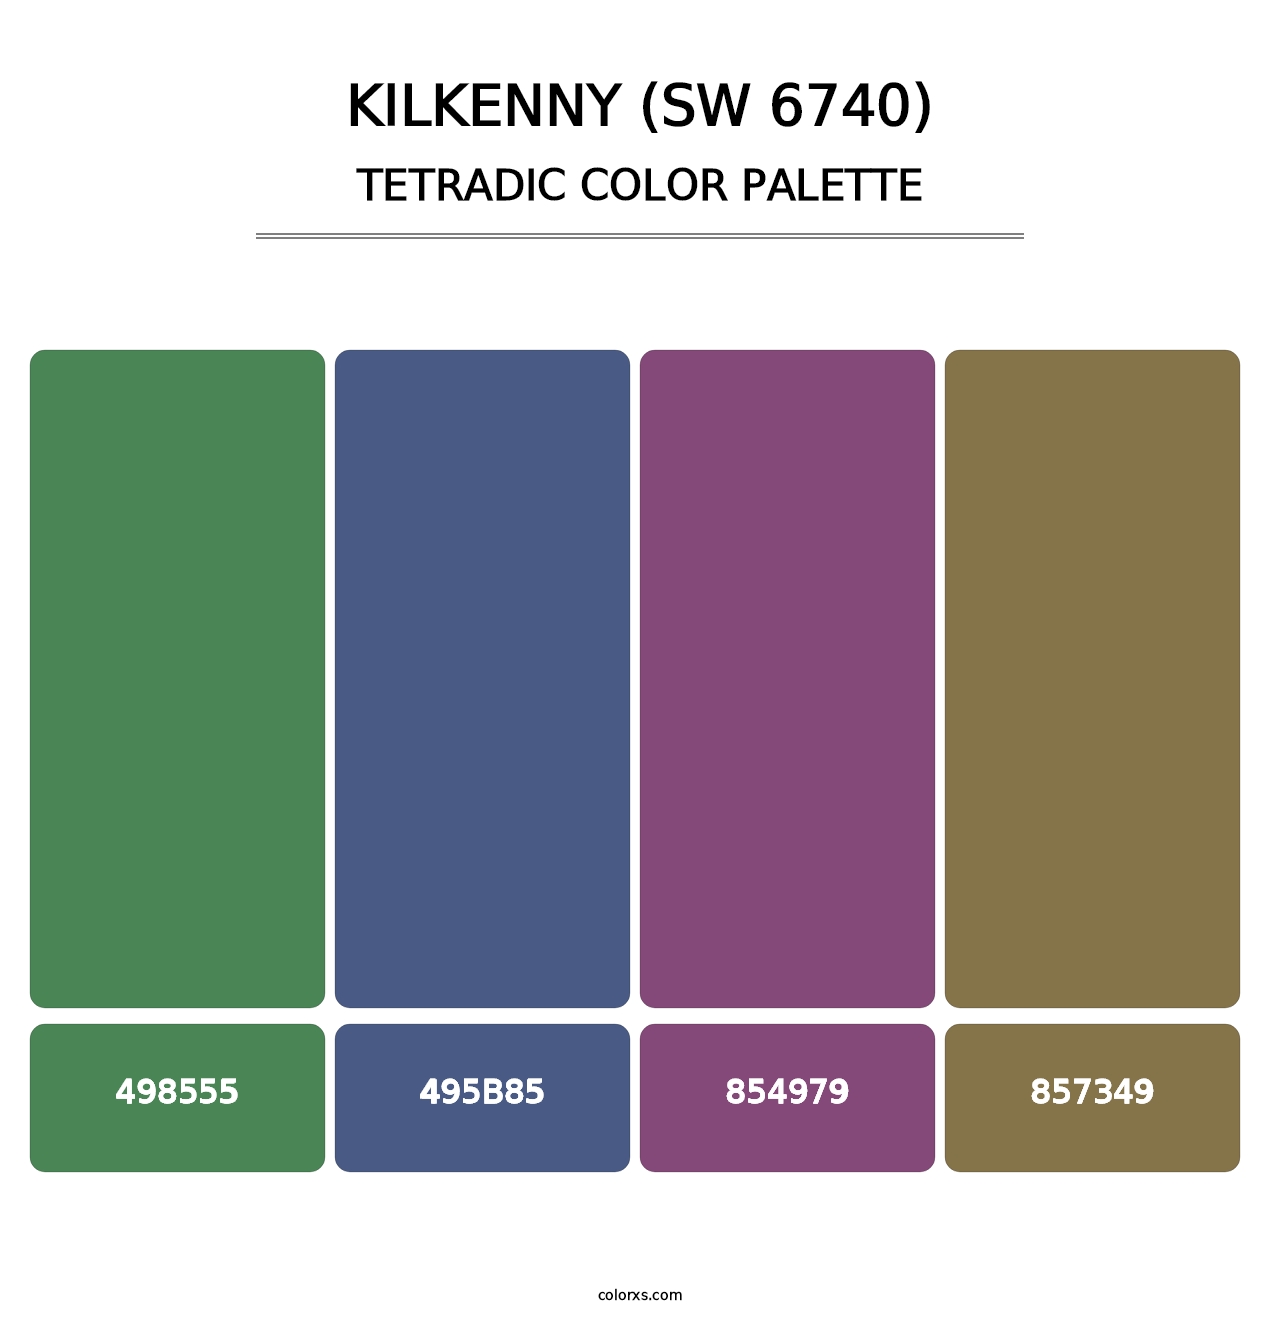 Kilkenny (SW 6740) - Tetradic Color Palette